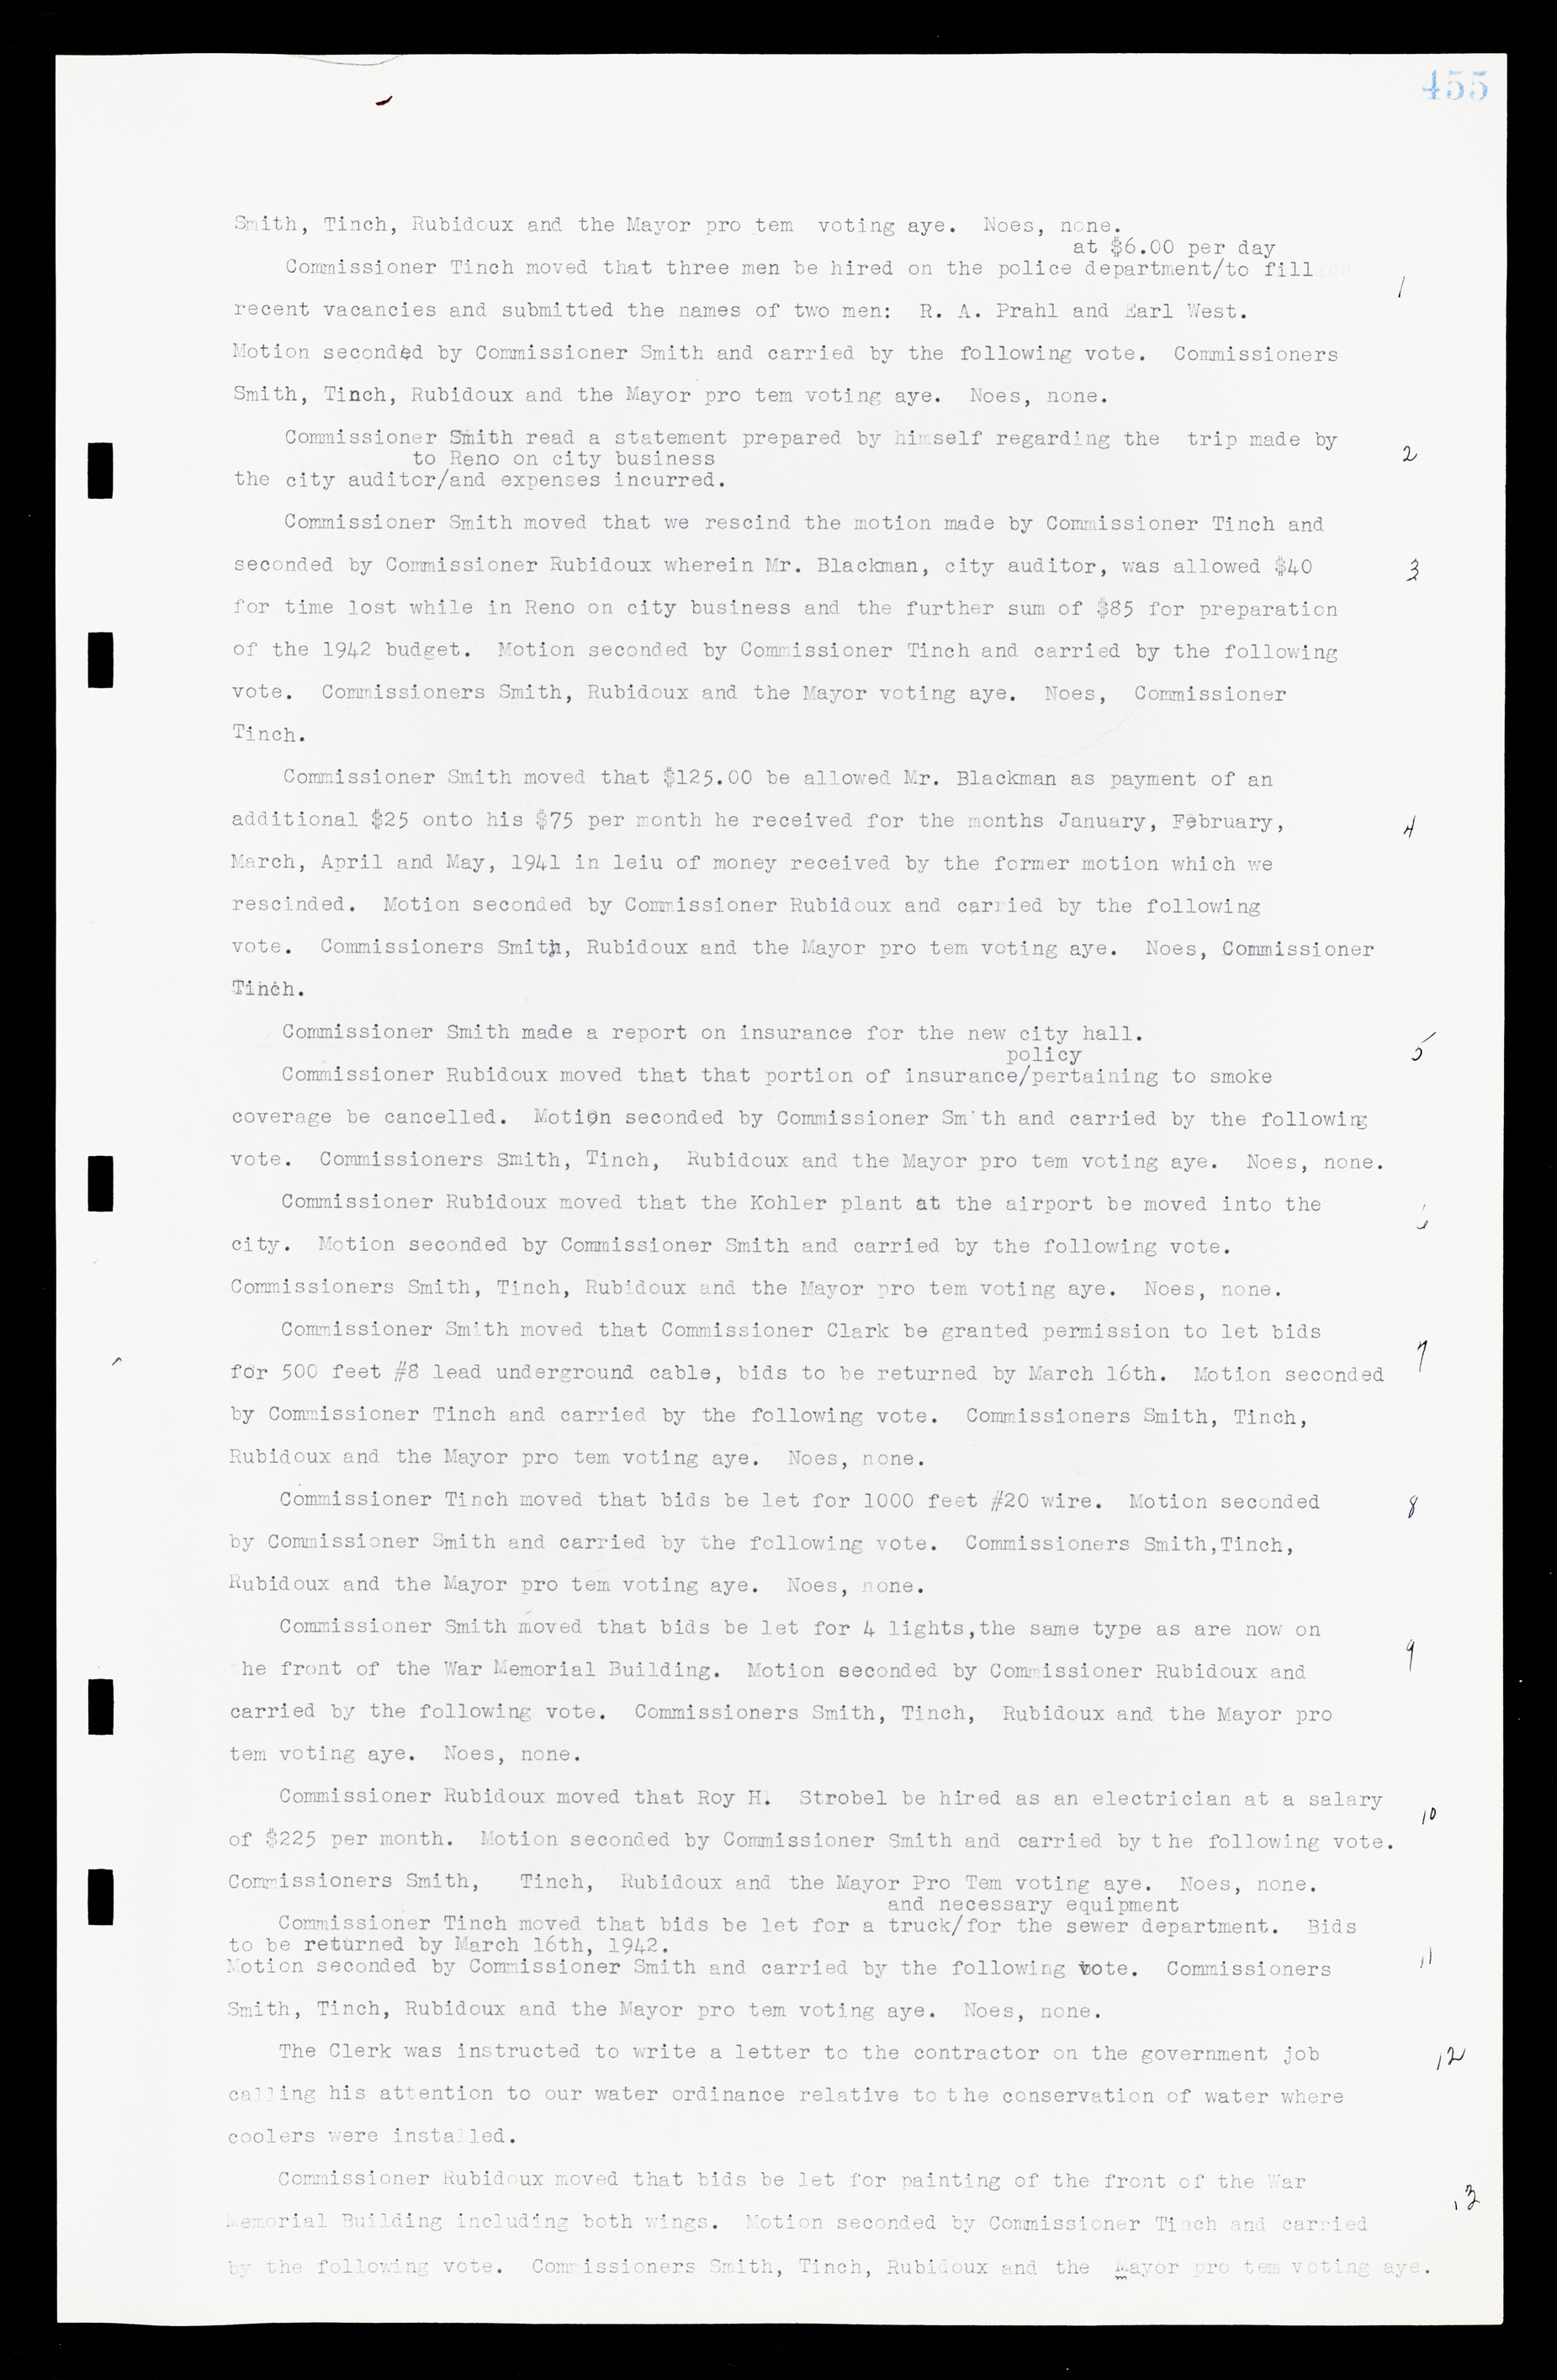 Las Vegas City Commission Minutes, February 17, 1937 to August 4, 1942, lvc000004-483